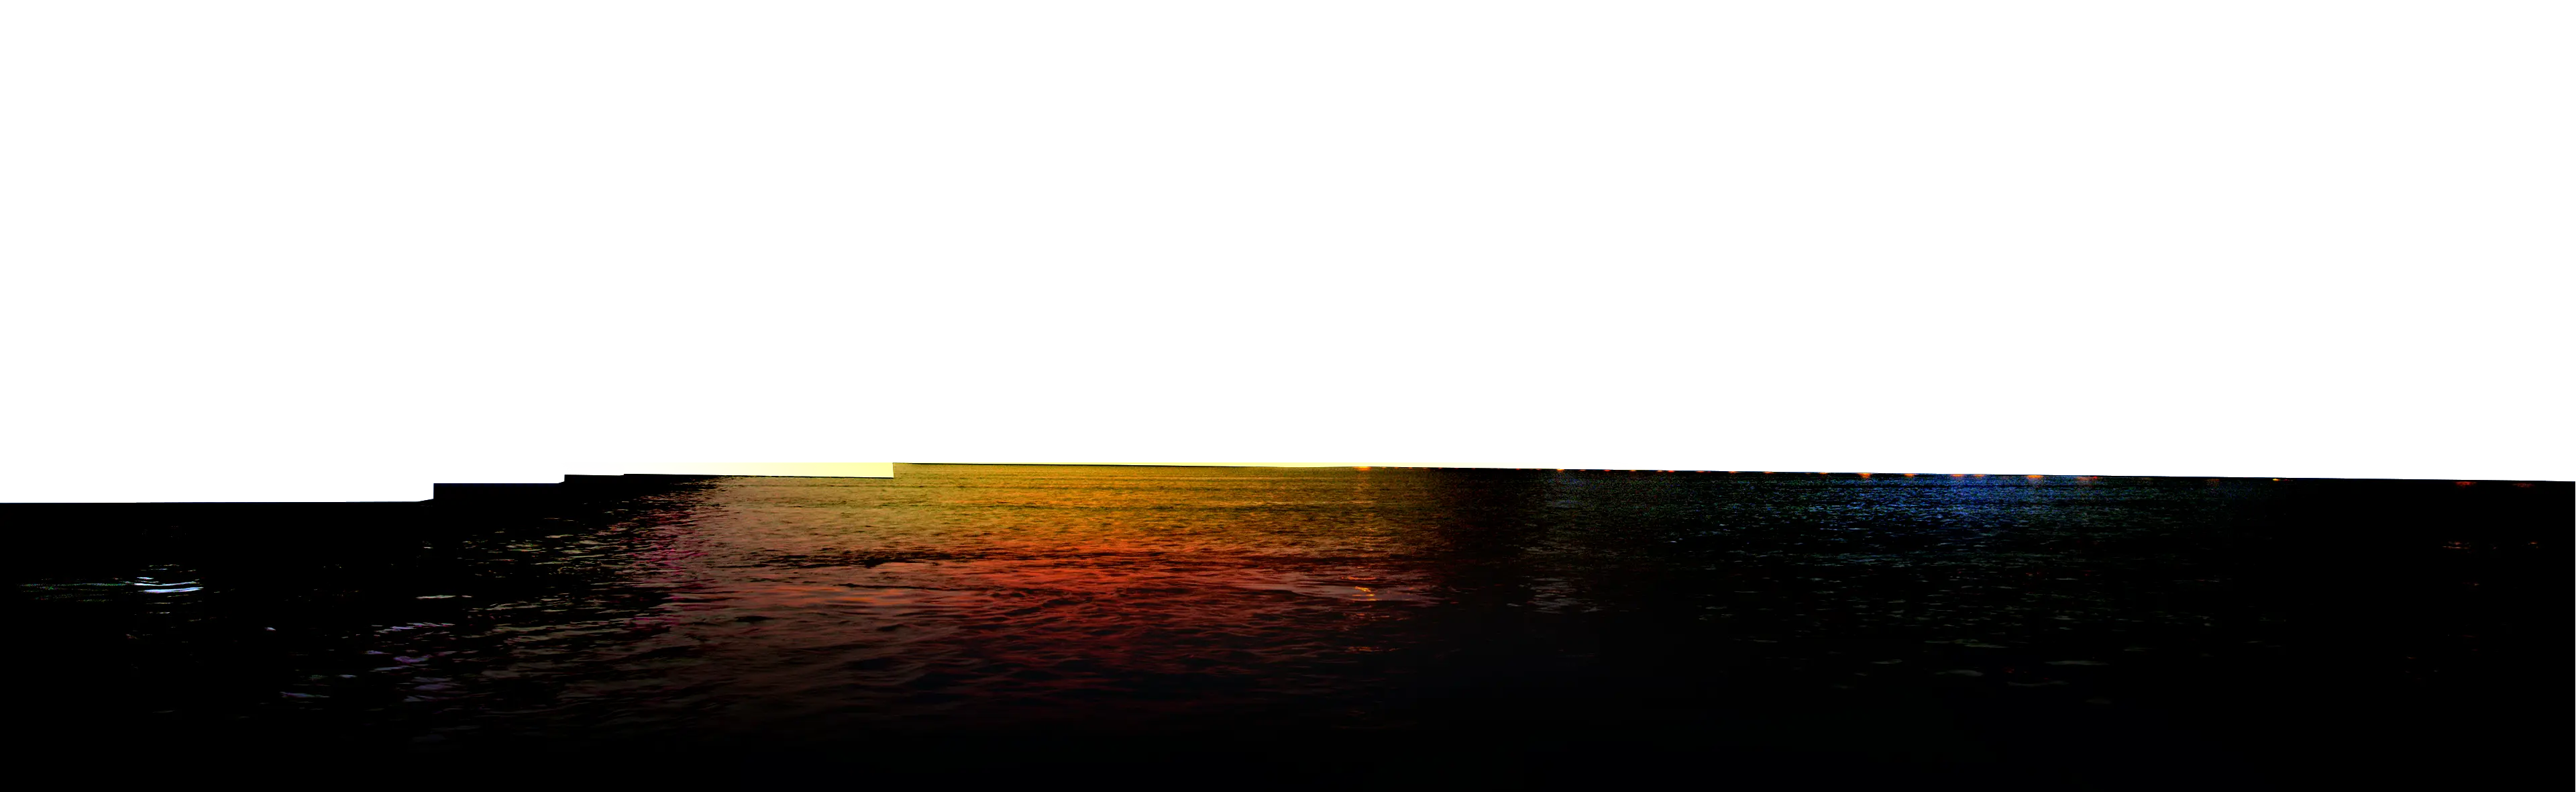 background image ocean